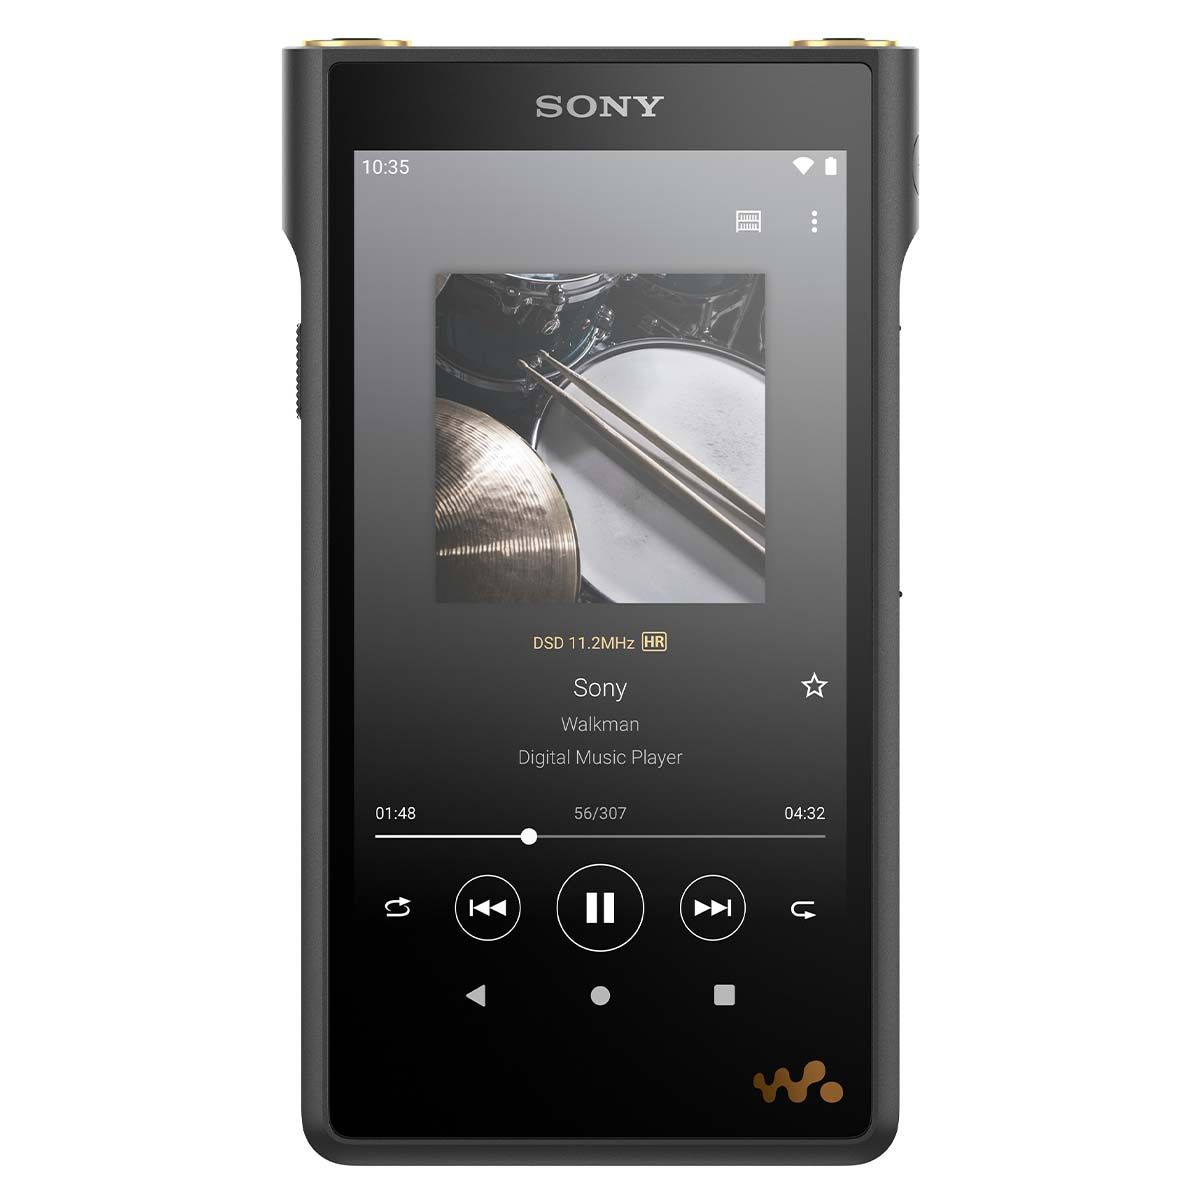 Sony WM1AM2 Walkman Digital Music Player - front view with album art